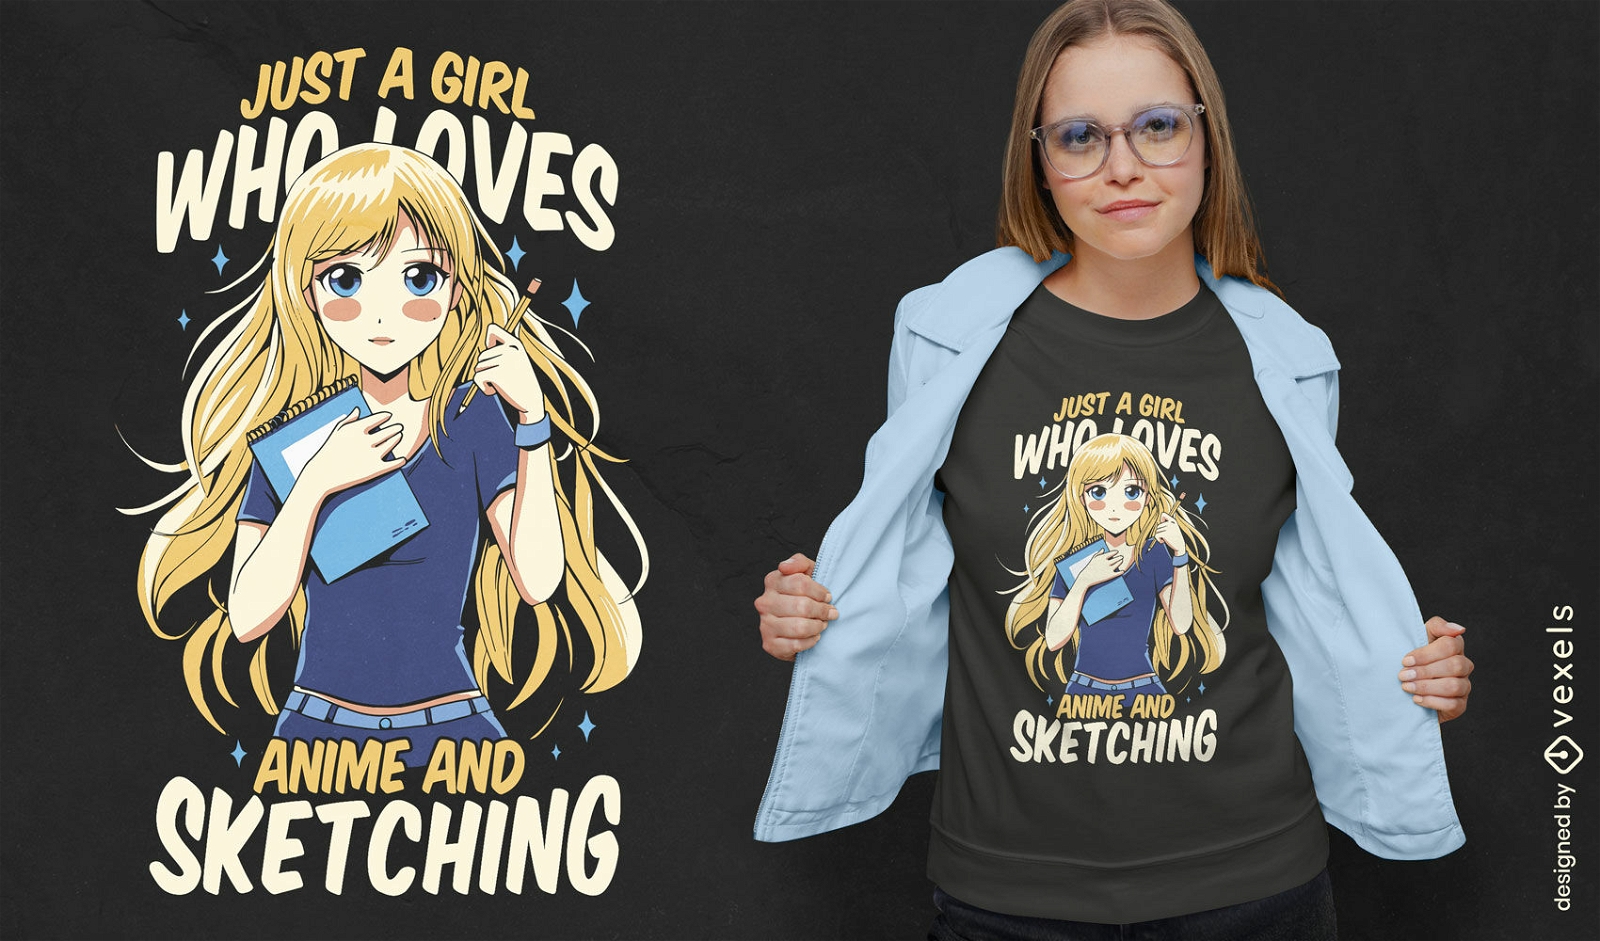 Lindo design de camiseta de anime girl